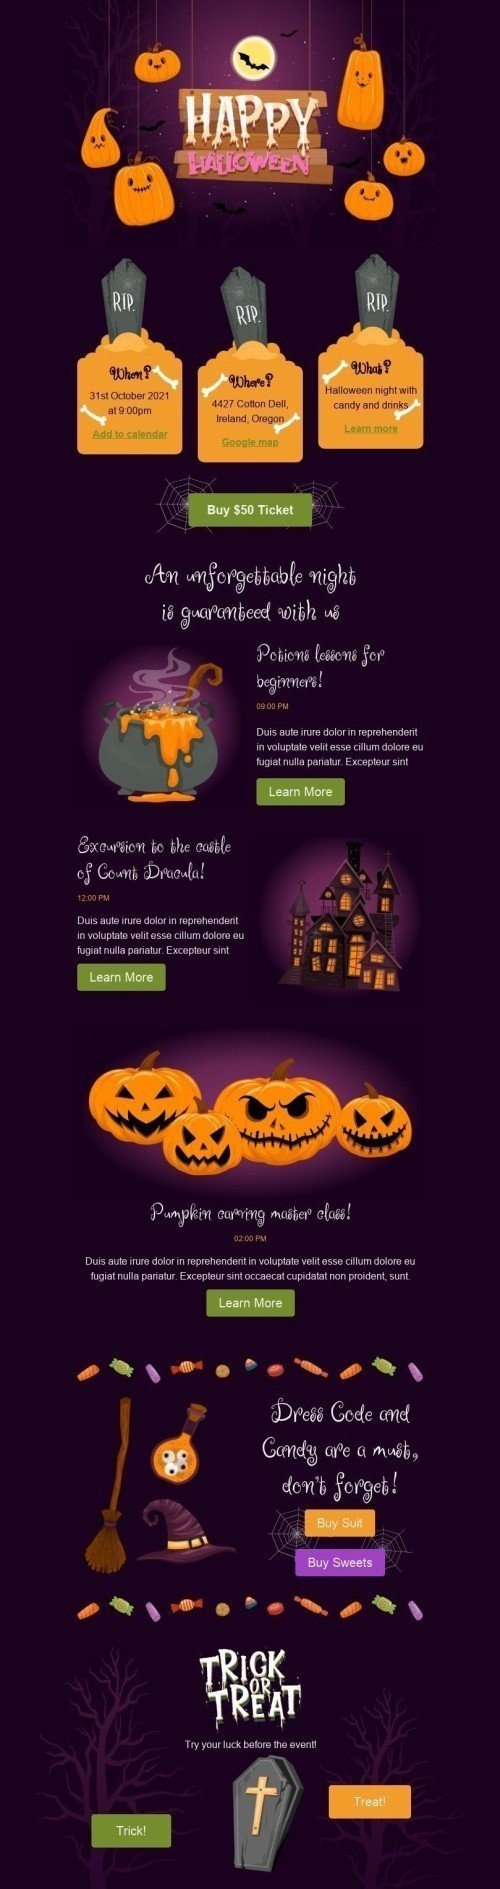 Шаблон письма к празднику Хэллоуин «Ночь Хэллоуина» для индустрии «Хобби» mobile view